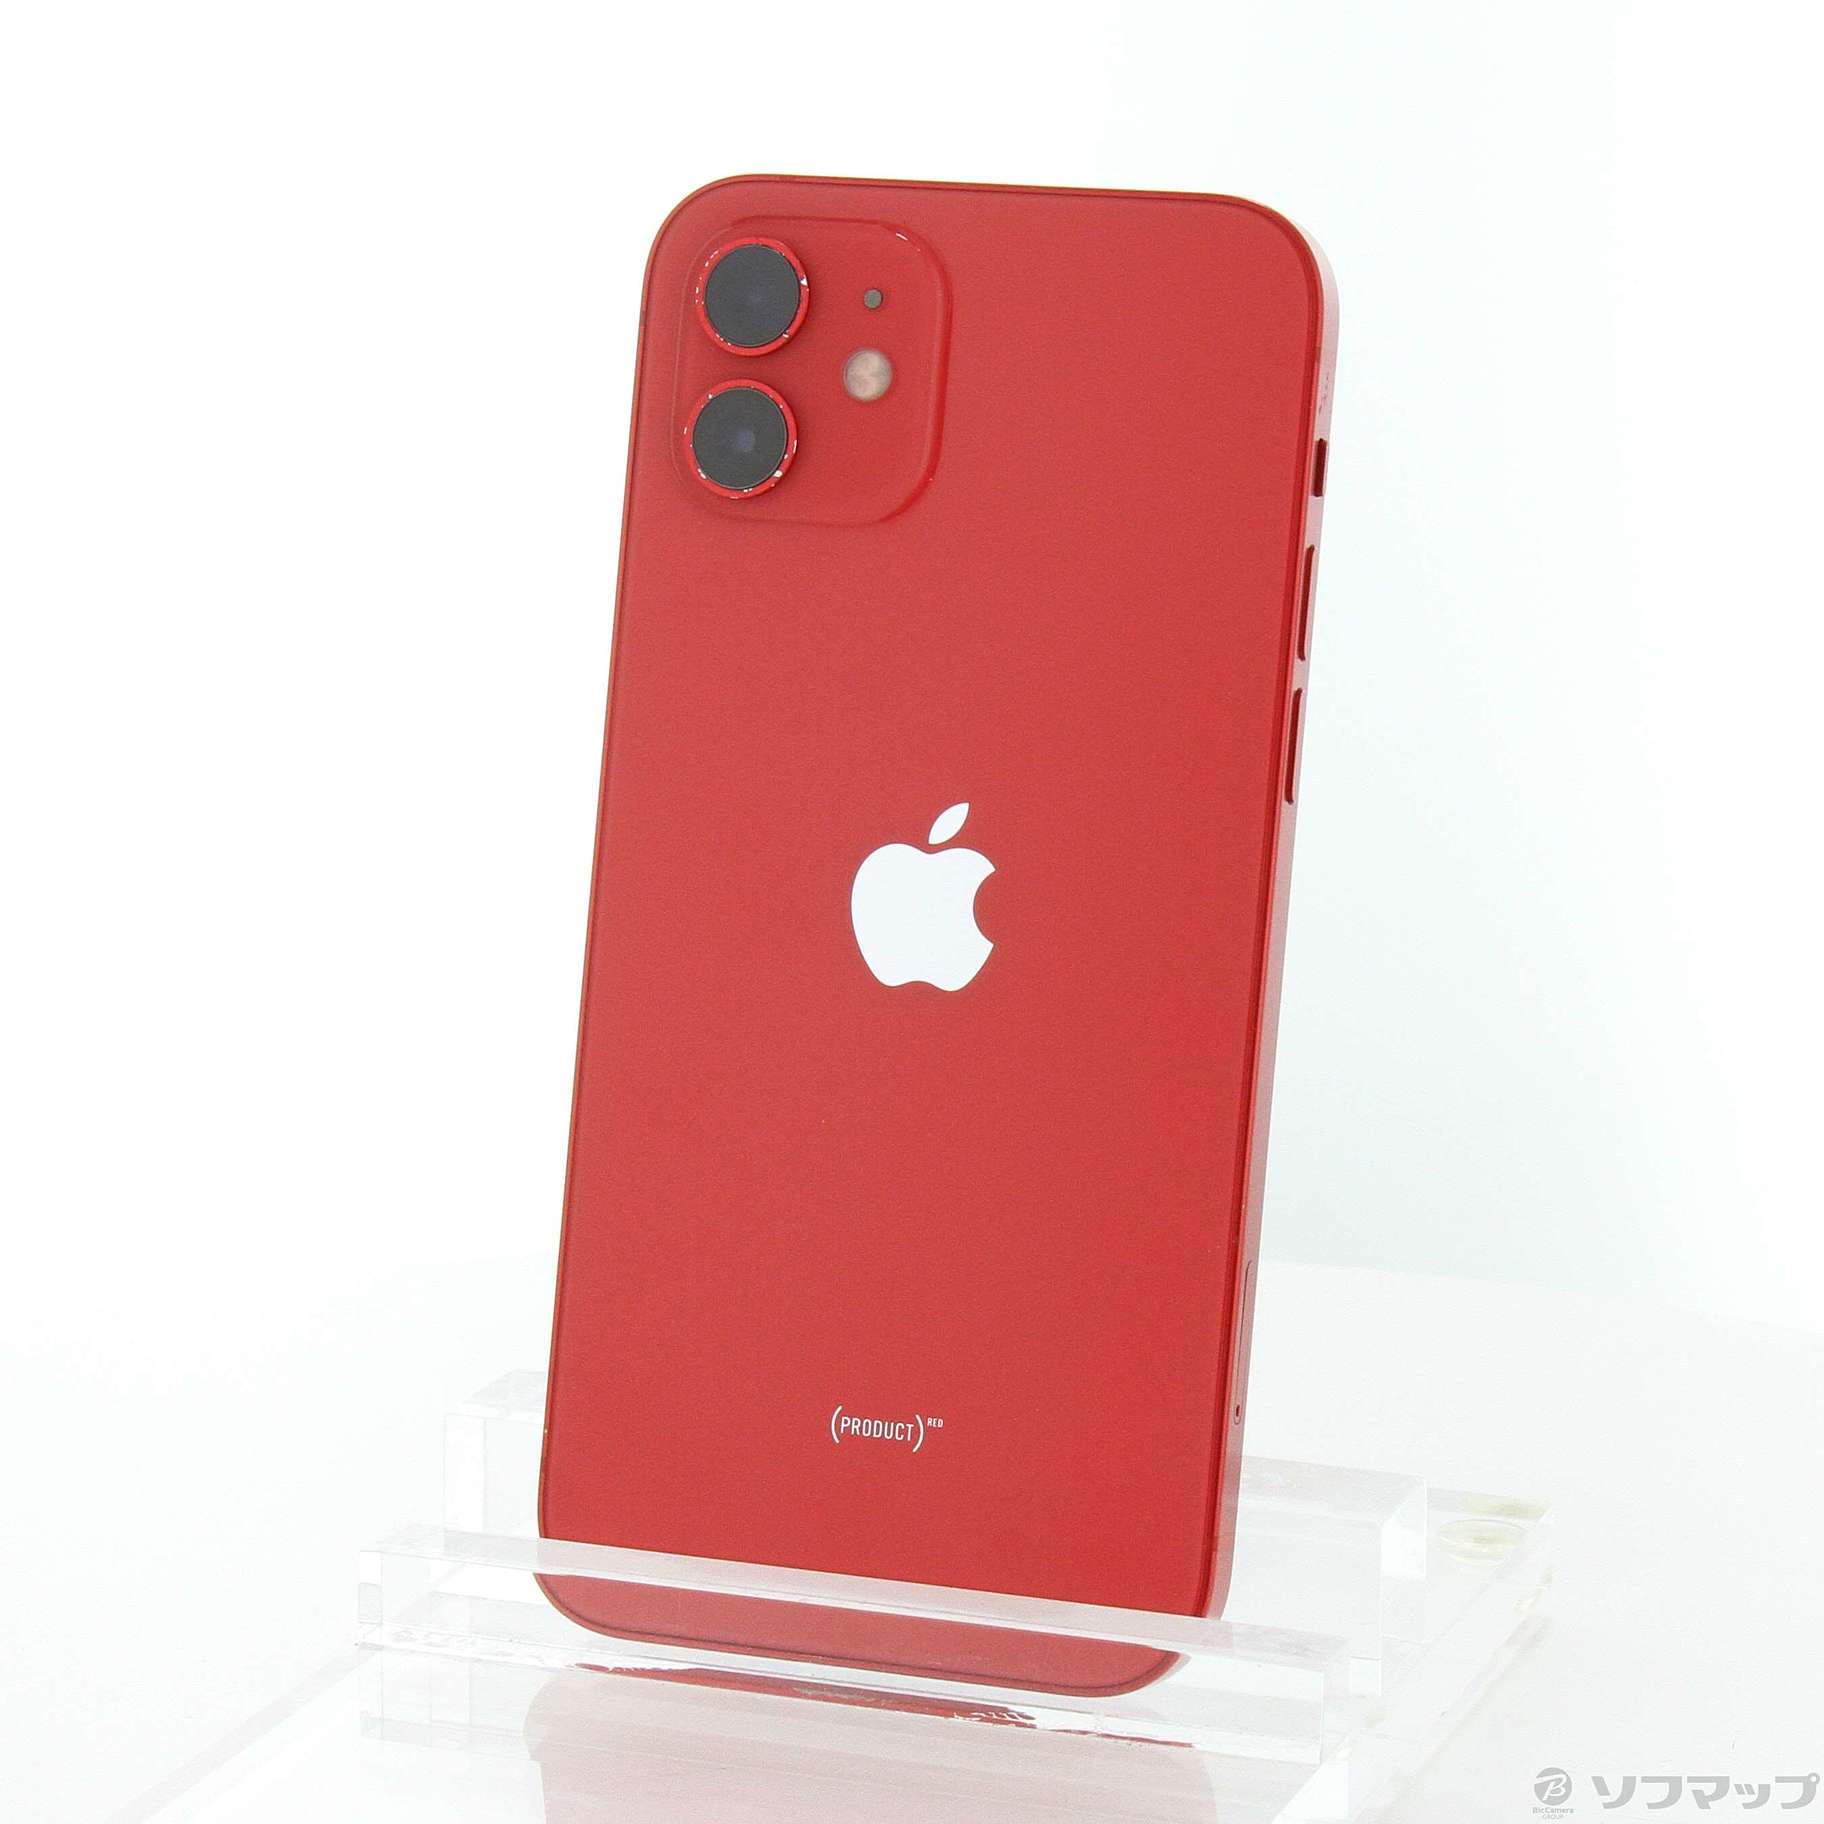 【SIMフリー】iPhone12 64GB product RED　美品